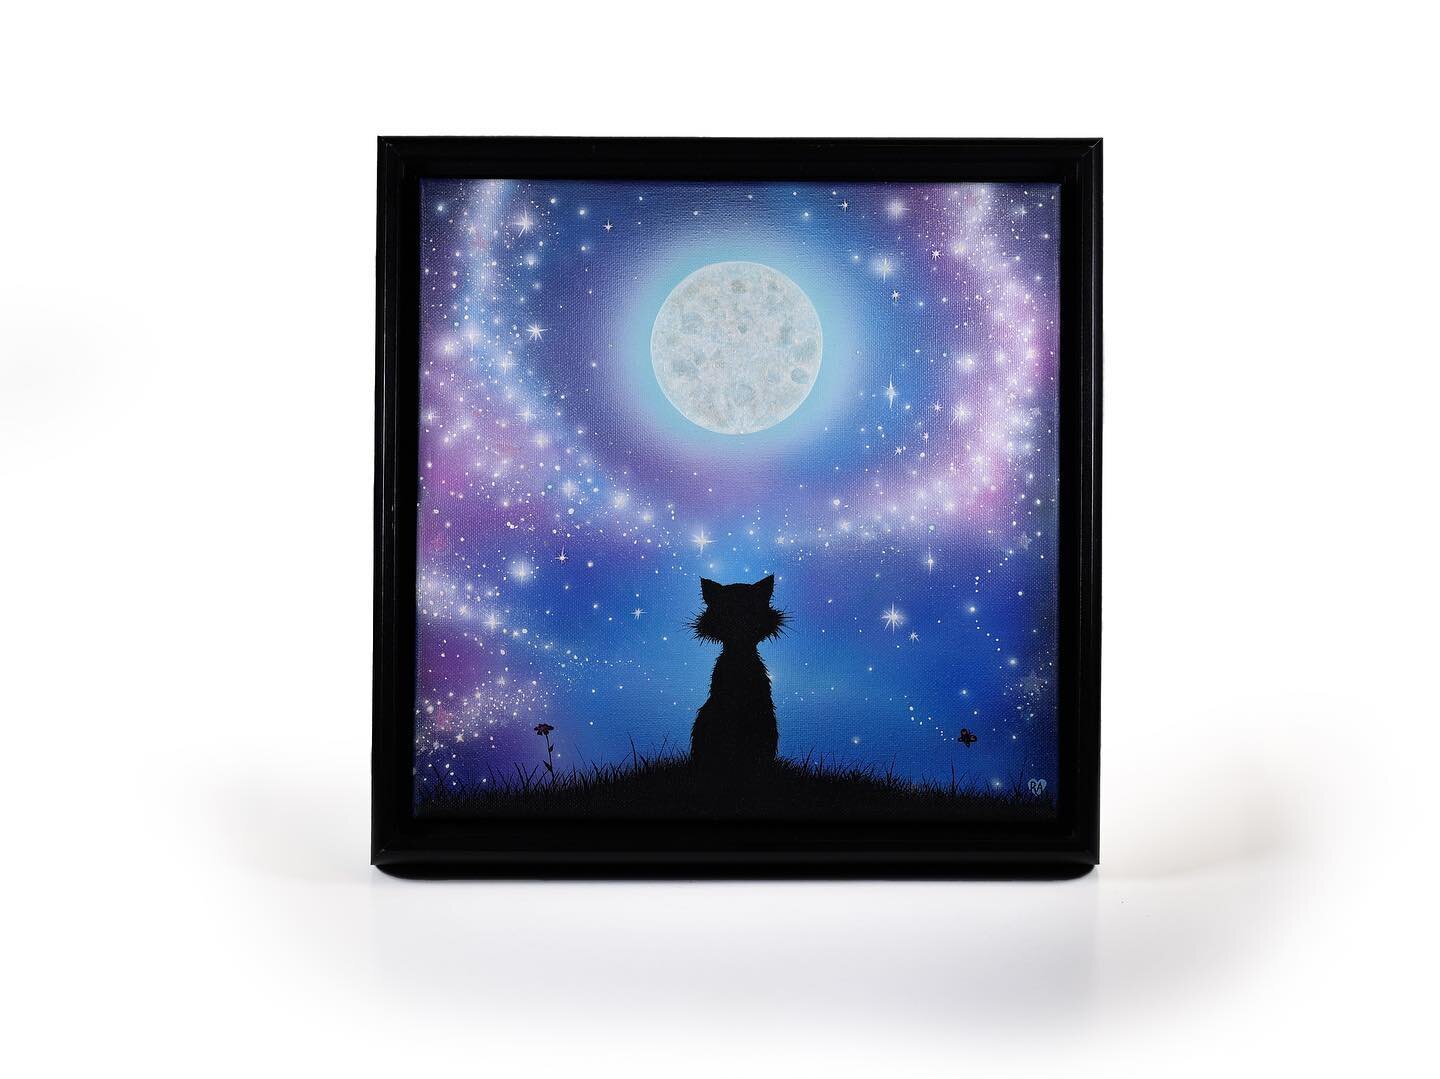 &ldquo;Angel Cat&rdquo; 🎨🖌️

Available meow at my Etsy Shop: MakeArtShine.etsy.com 

#angelcat #acrylicpainting #makeartshine #artbyrondaalflen #moonchildart #fullmoon #cat #mooncat #lunacat #luna #universecat #galaxycat #spacecat #catheaven #catwi